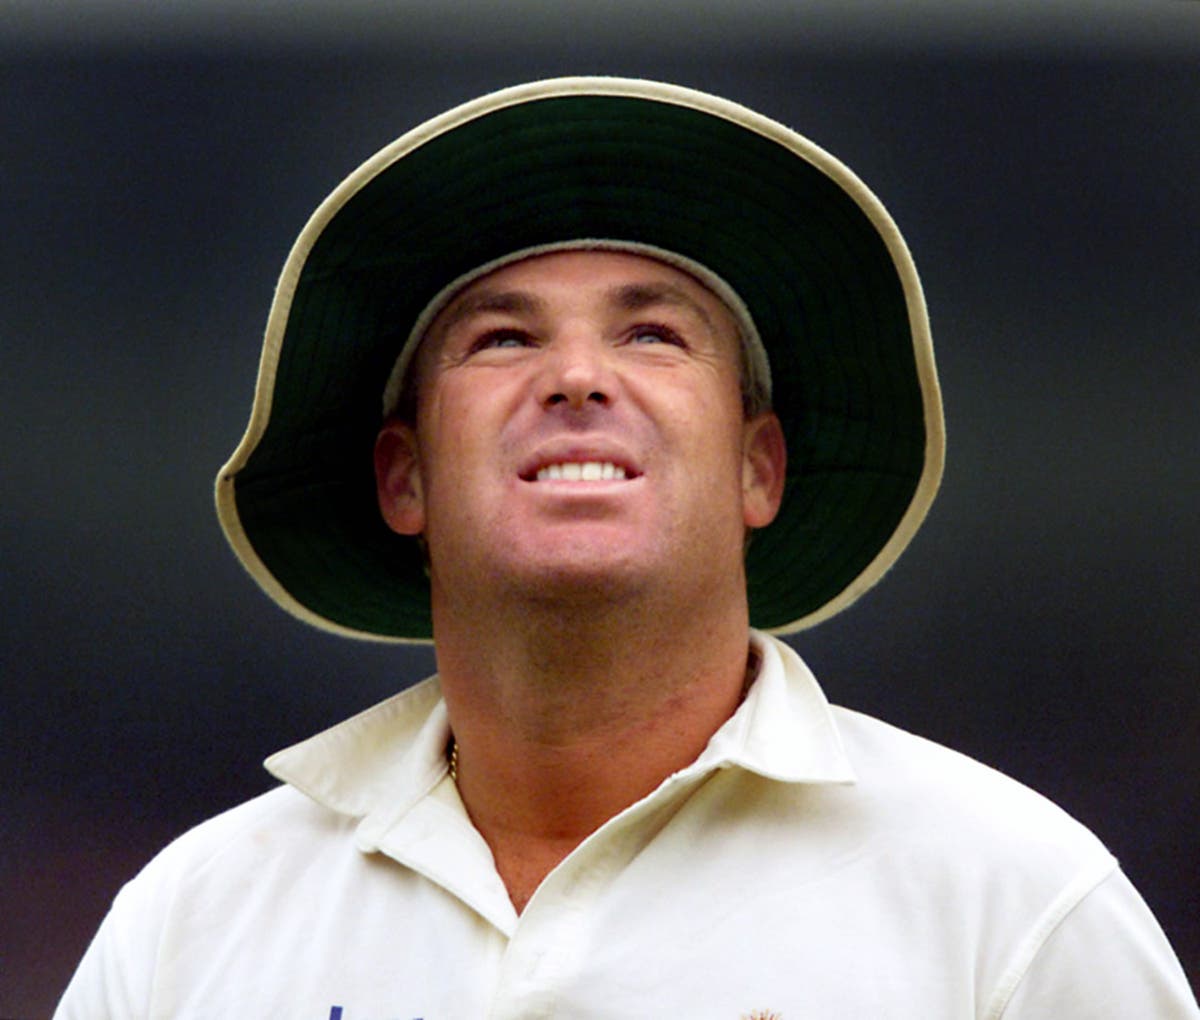 Cricket world mourns death of Australia great Shane Warne